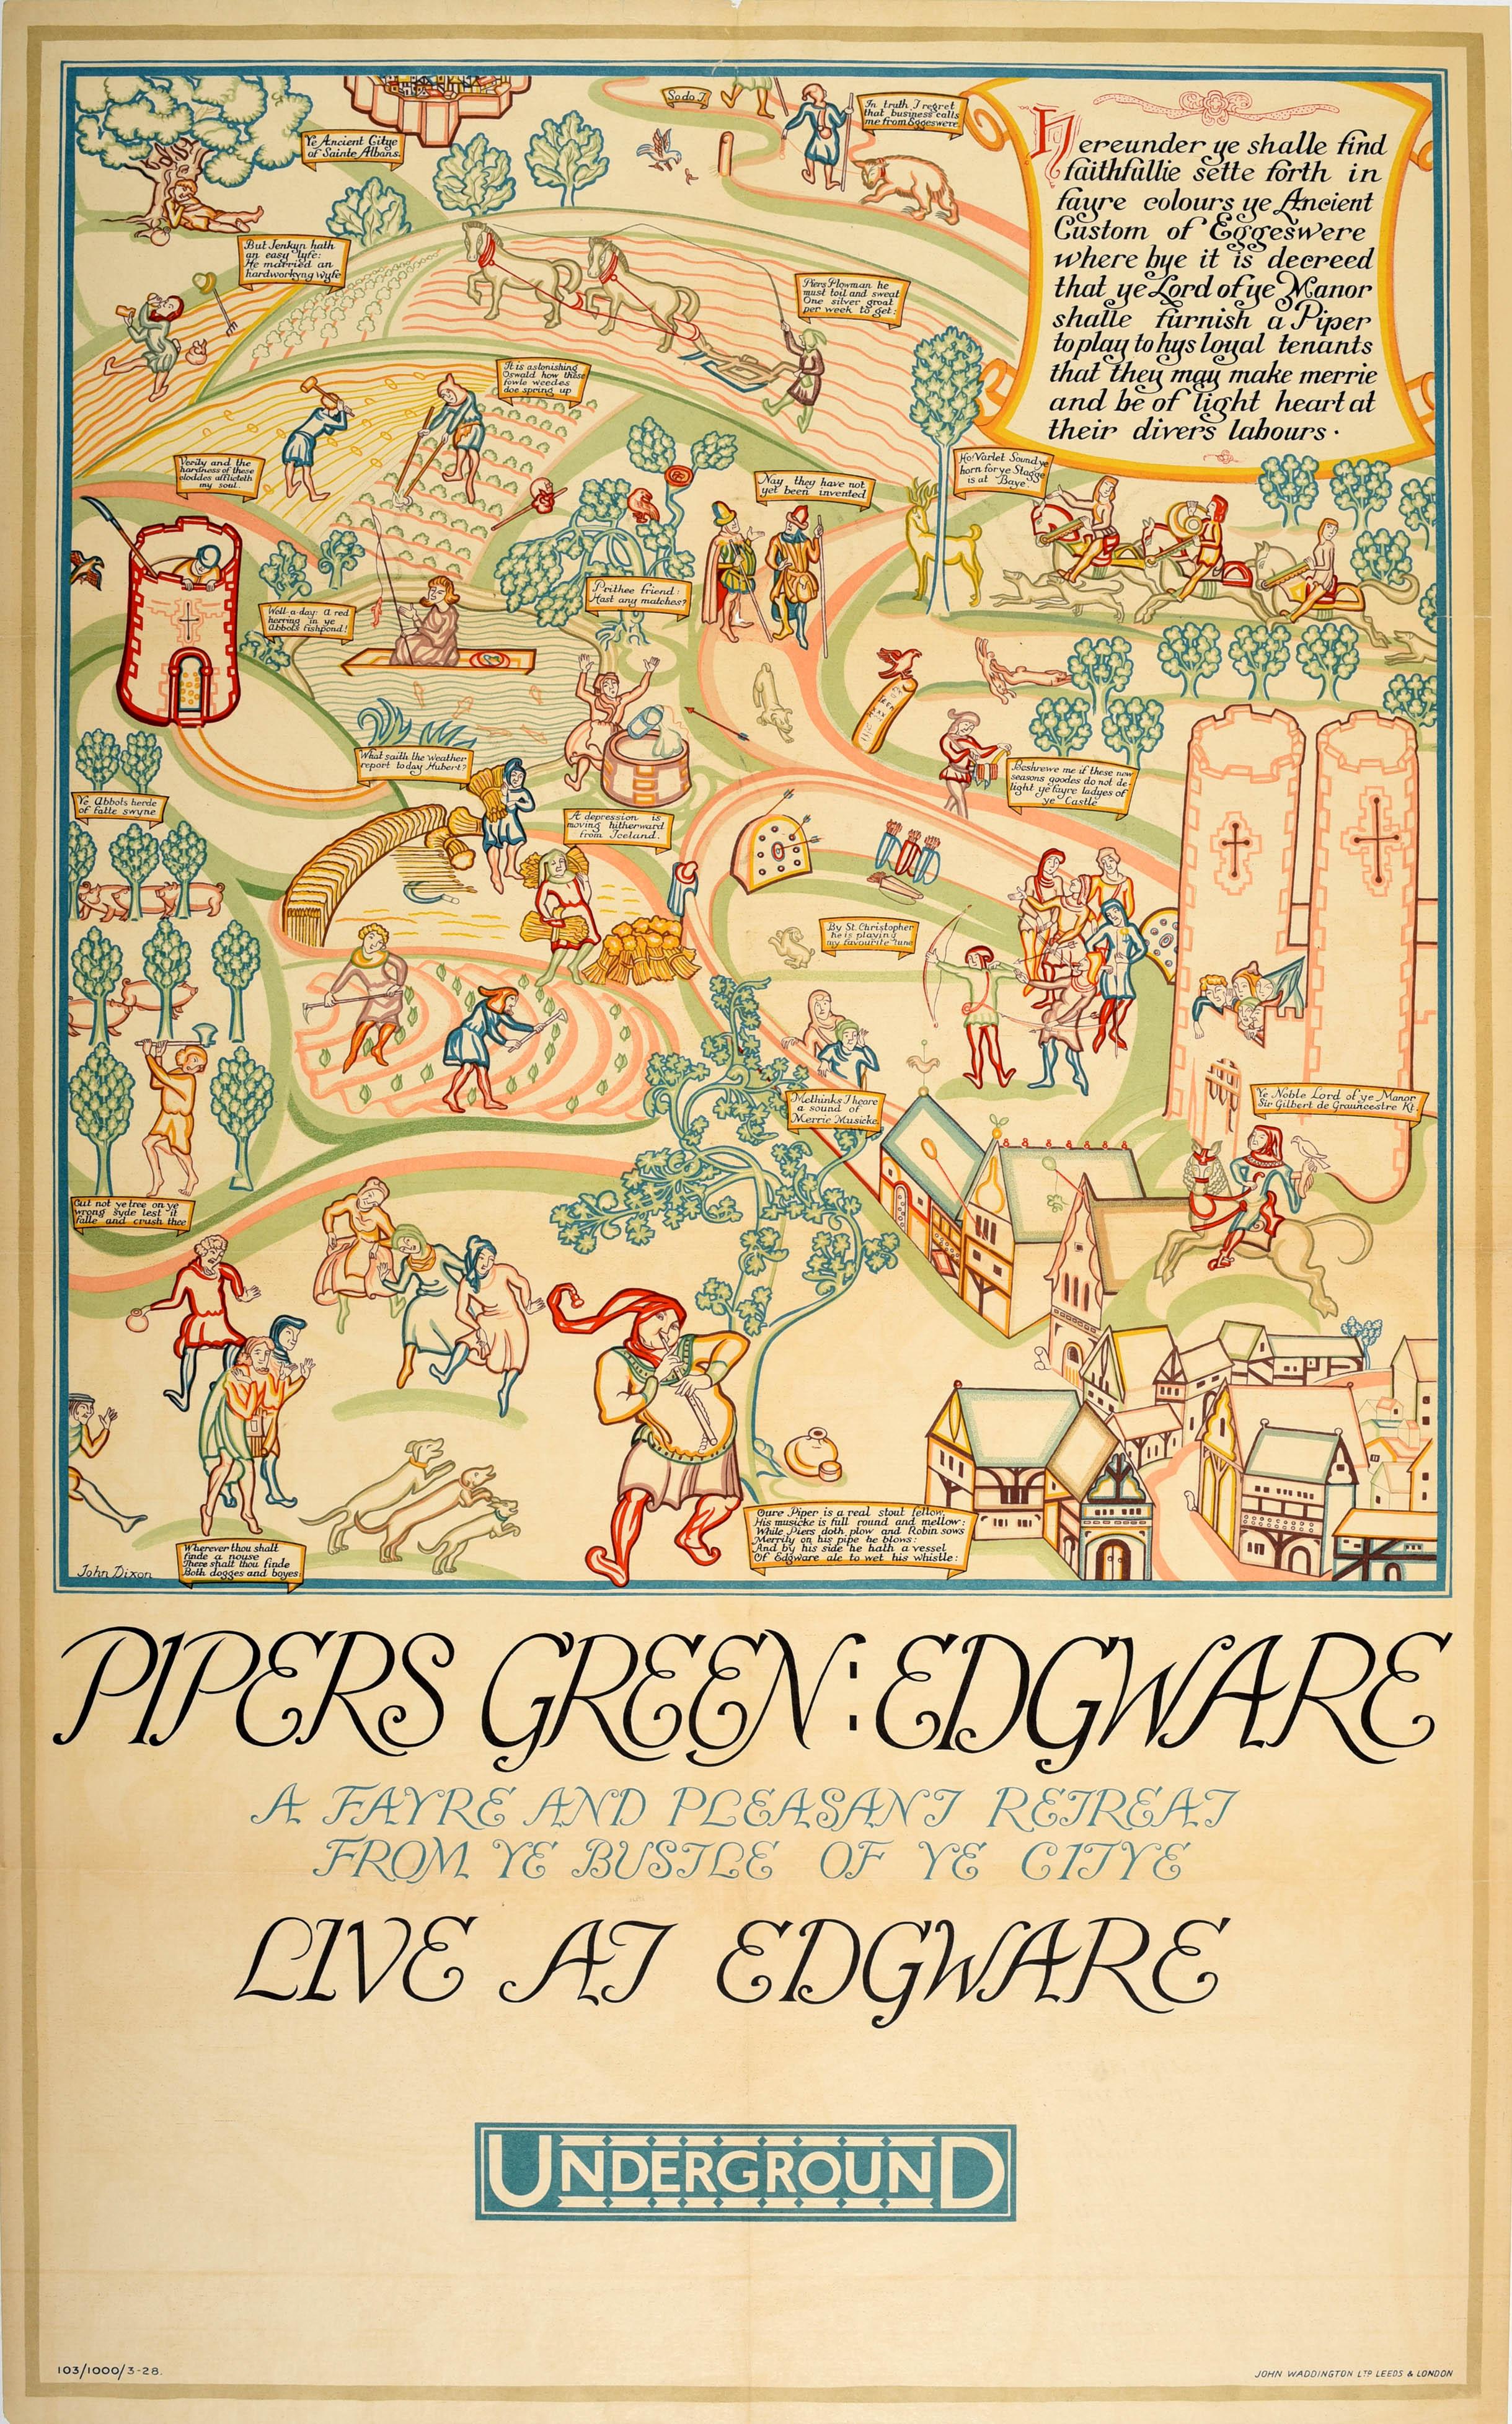 John Dixon Print - Original Vintage London Underground Poster Pipers Green Edgware Travel By Tube